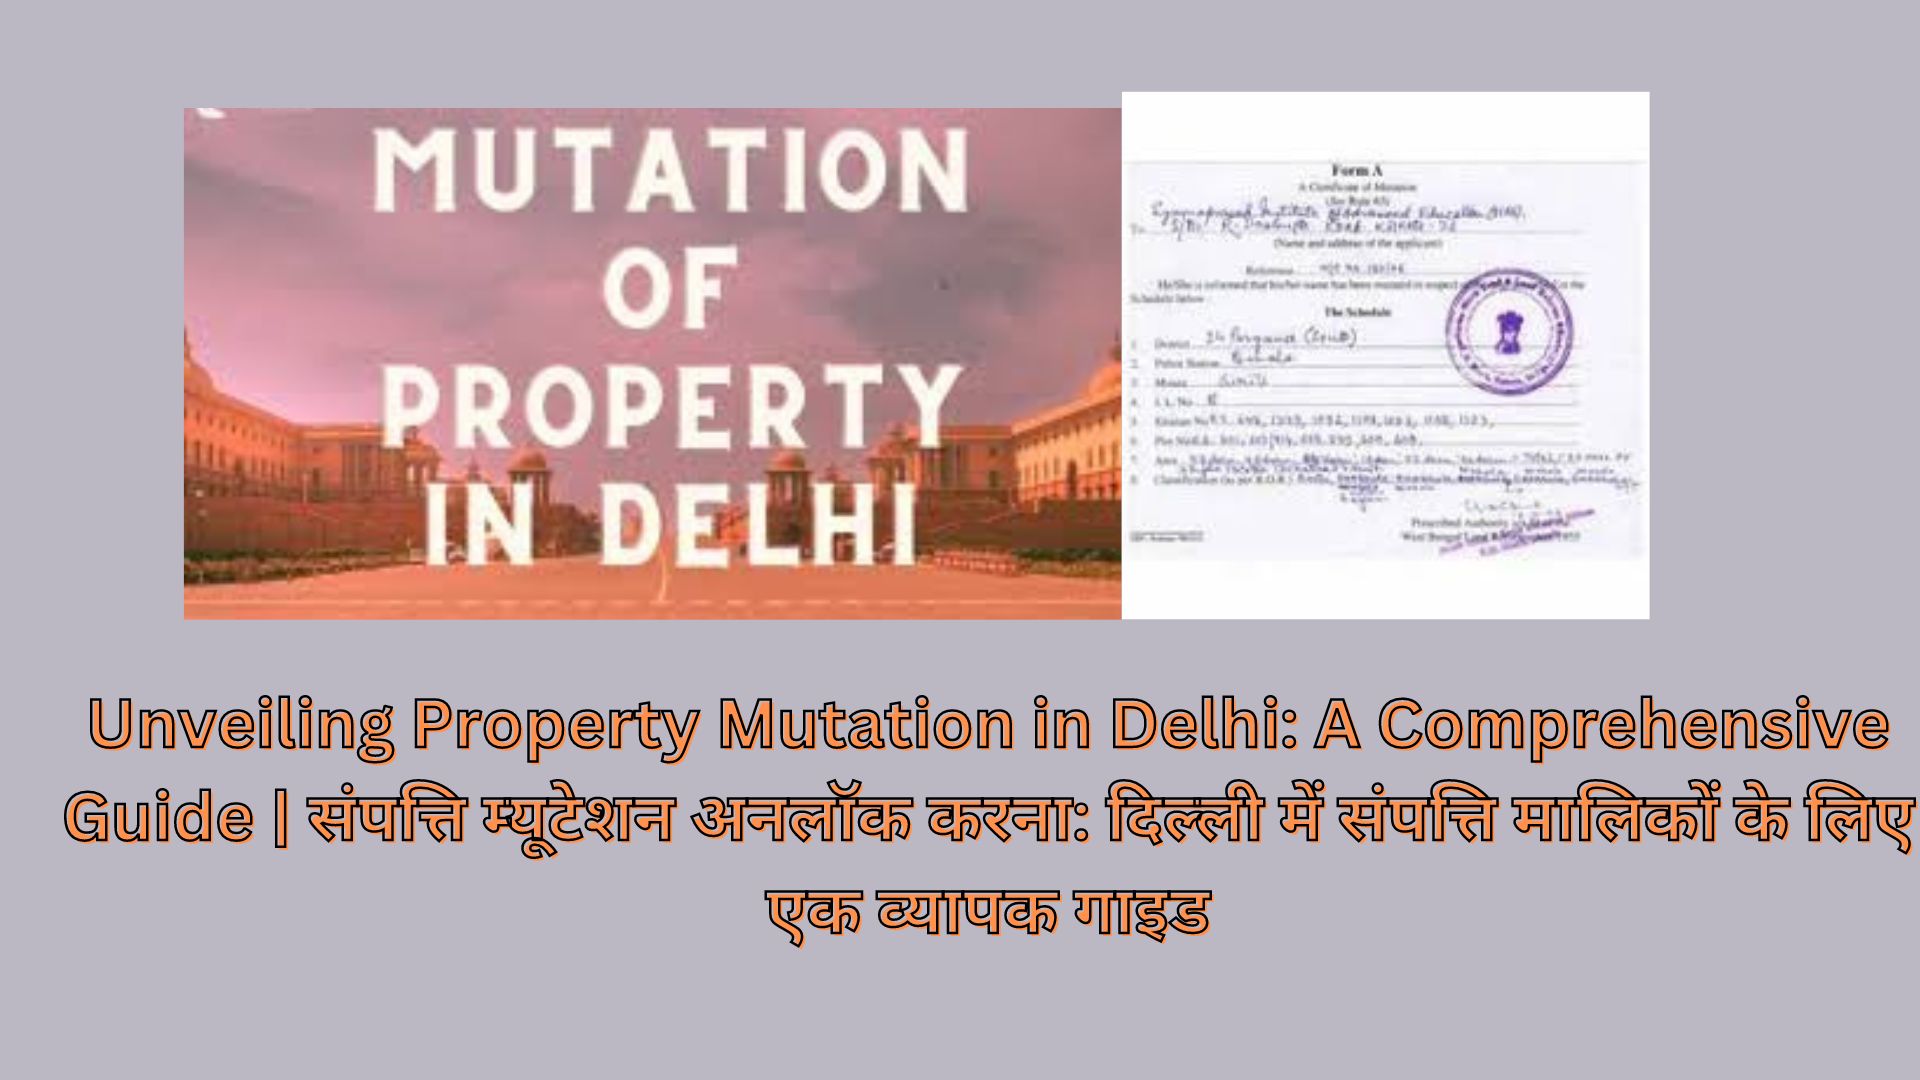 Unveiling Property Mutation in Delhi: A Comprehensive Guide | संपत्ति म्यूटेशन अनलॉक करना: दिल्ली में संपत्ति मालिकों के लिए एक व्यापक गाइड